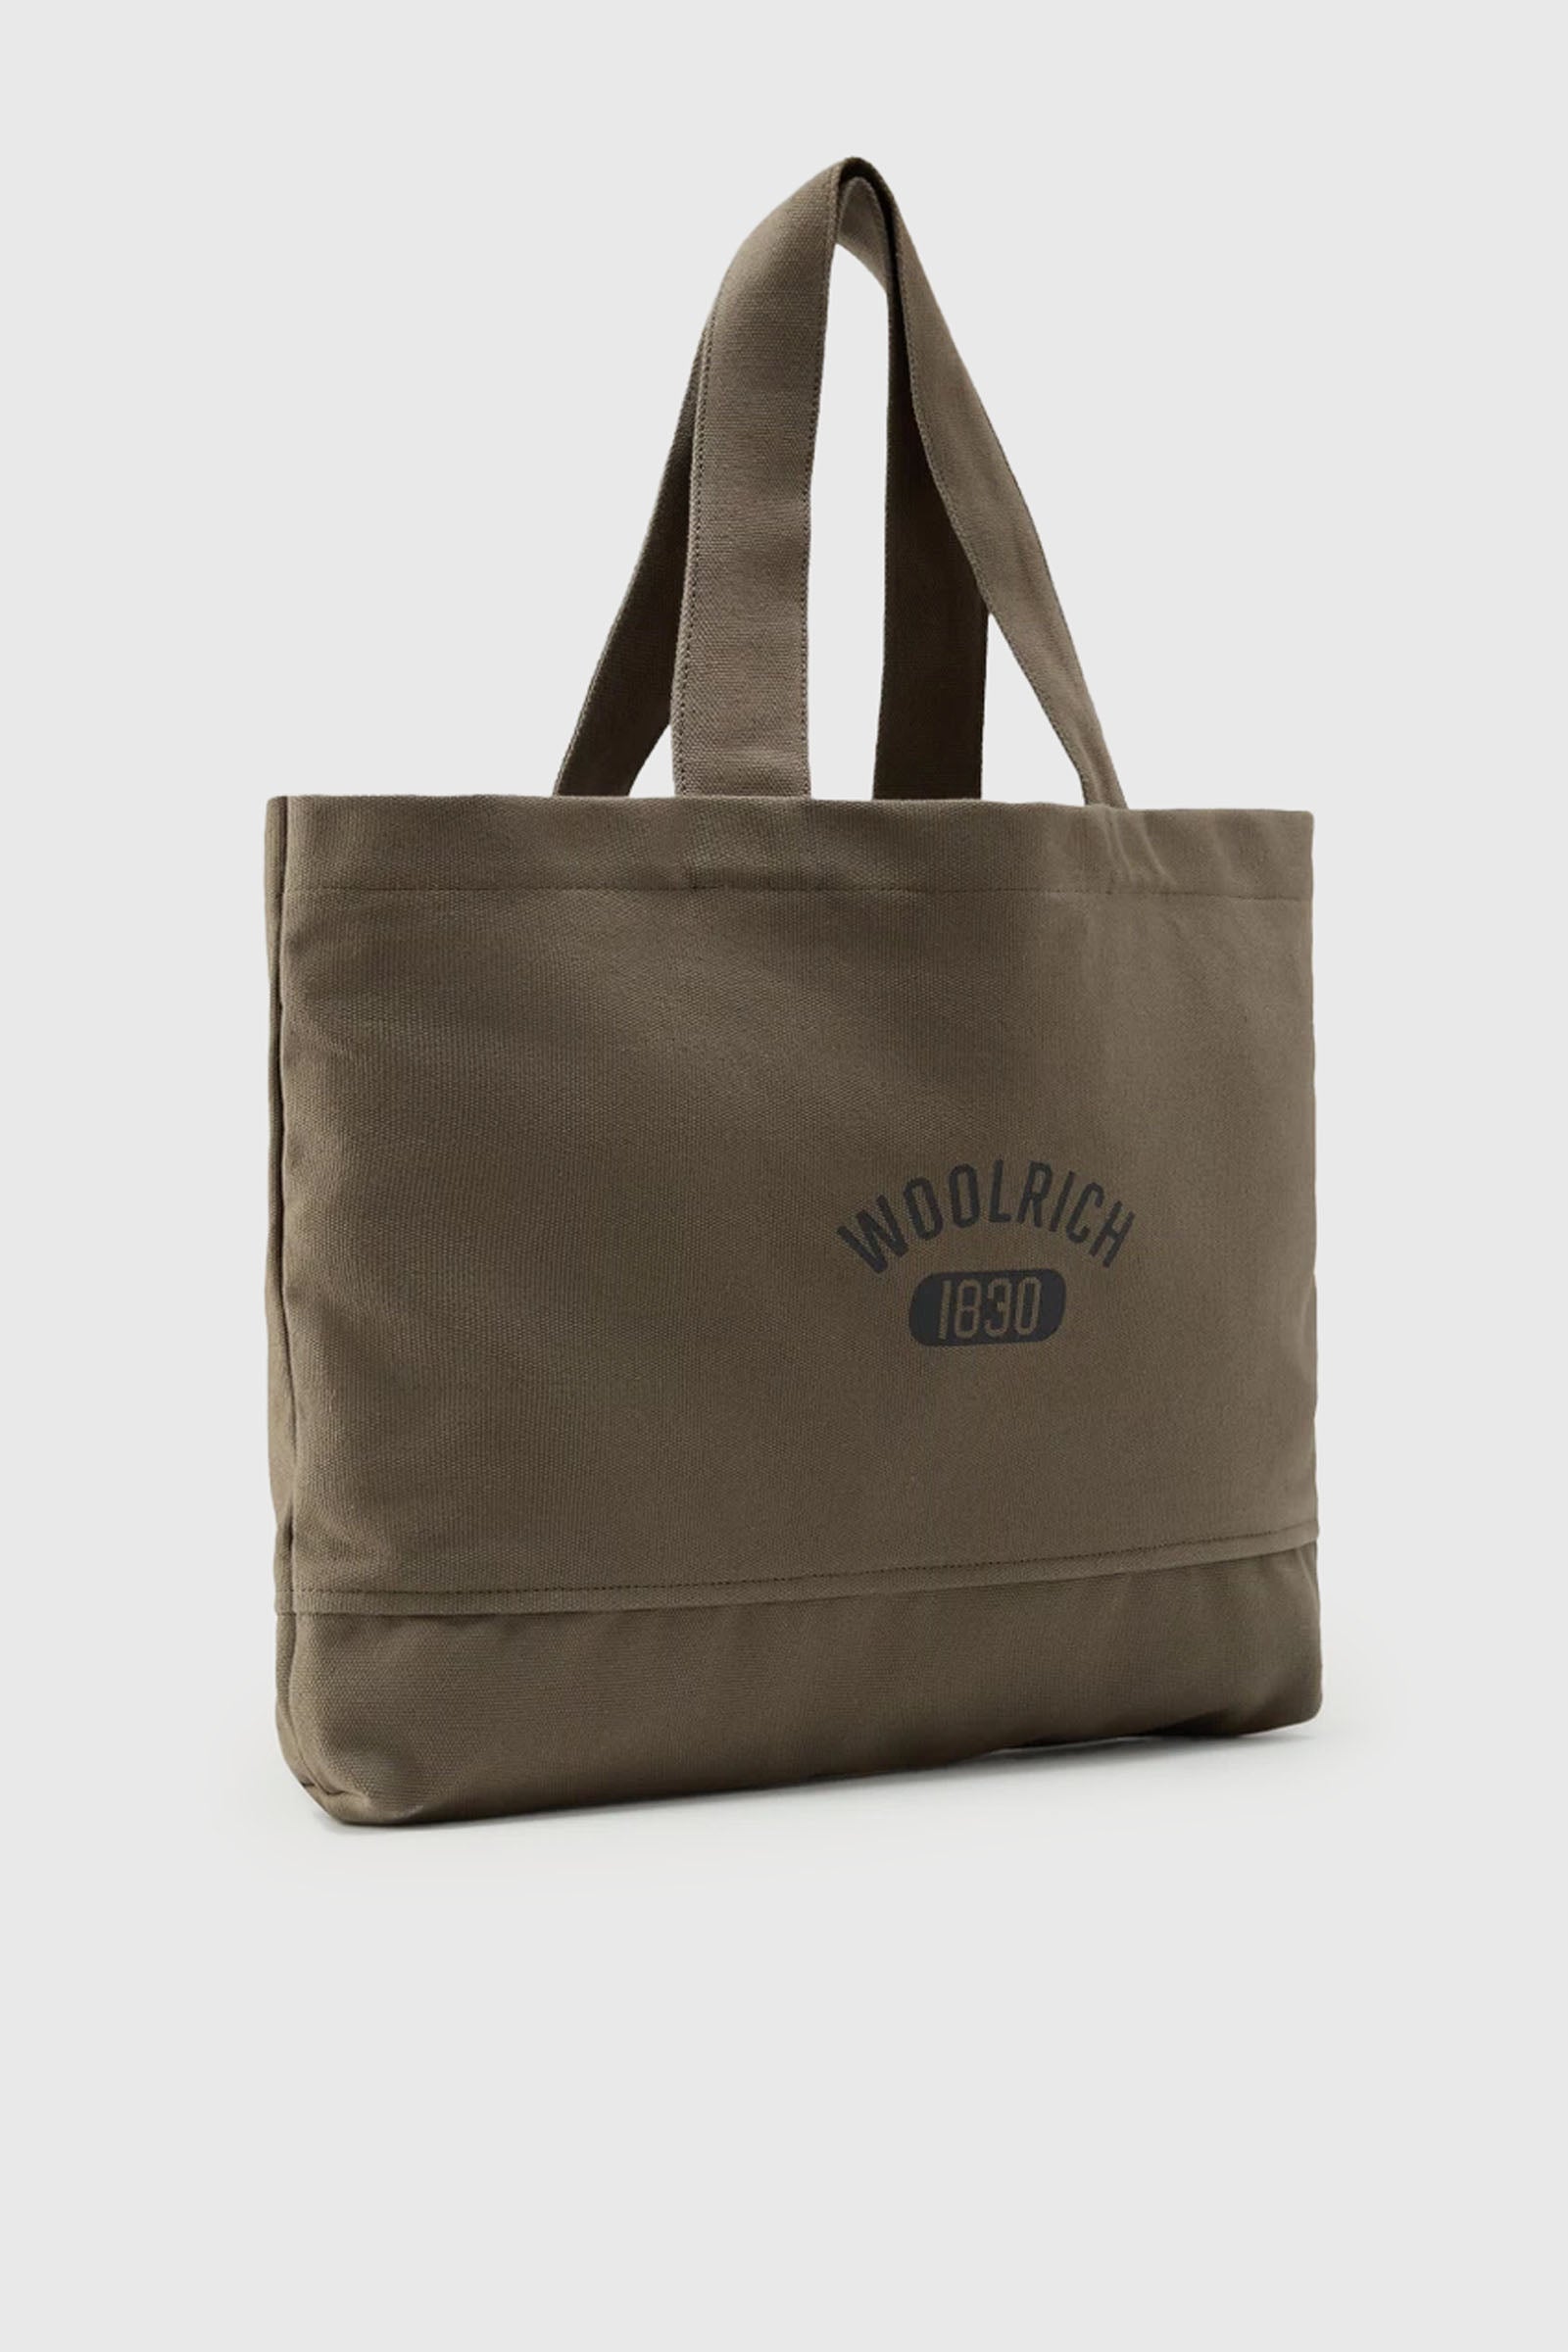 Woolrich Tote Bag CFWOBA0050MRUT37336178 Cotton Military Green - 3